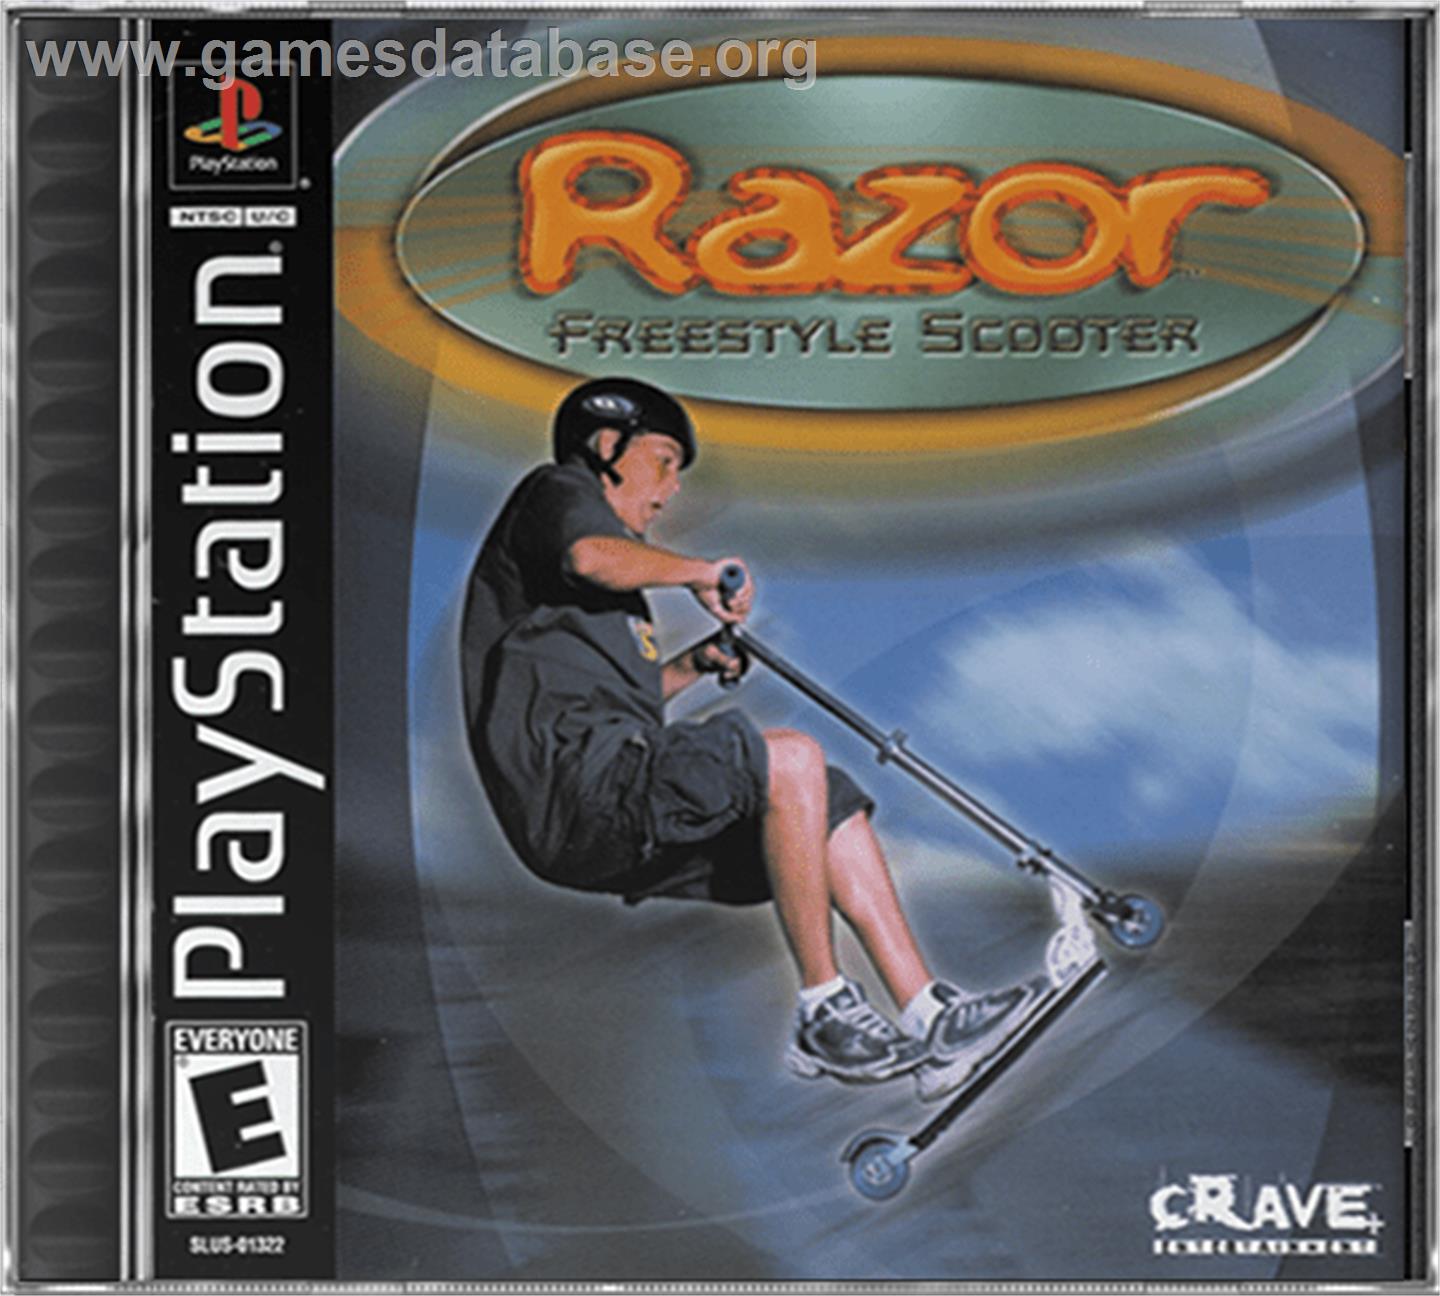 Razor Freestyle Scooter - Sony Playstation - Artwork - Box